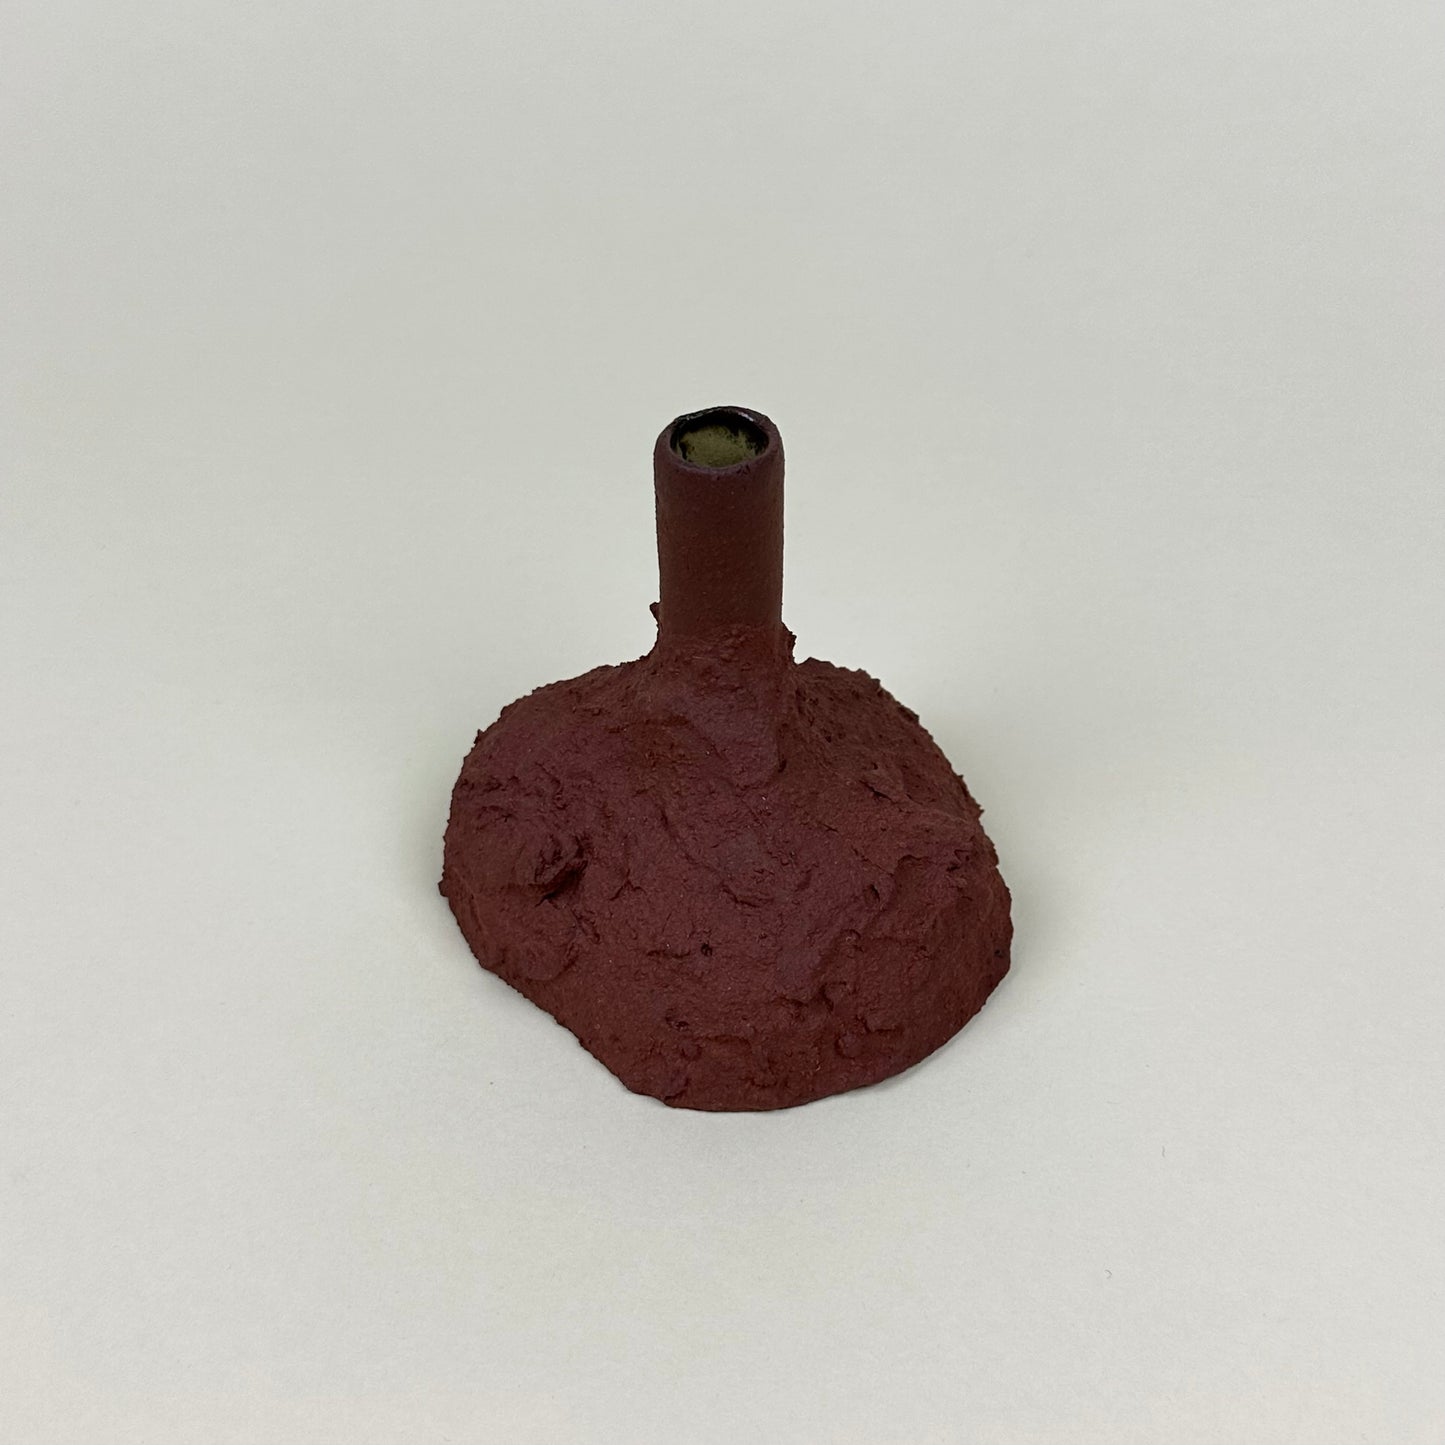 Small ceramic bud vase by Malwina Kleparska, red